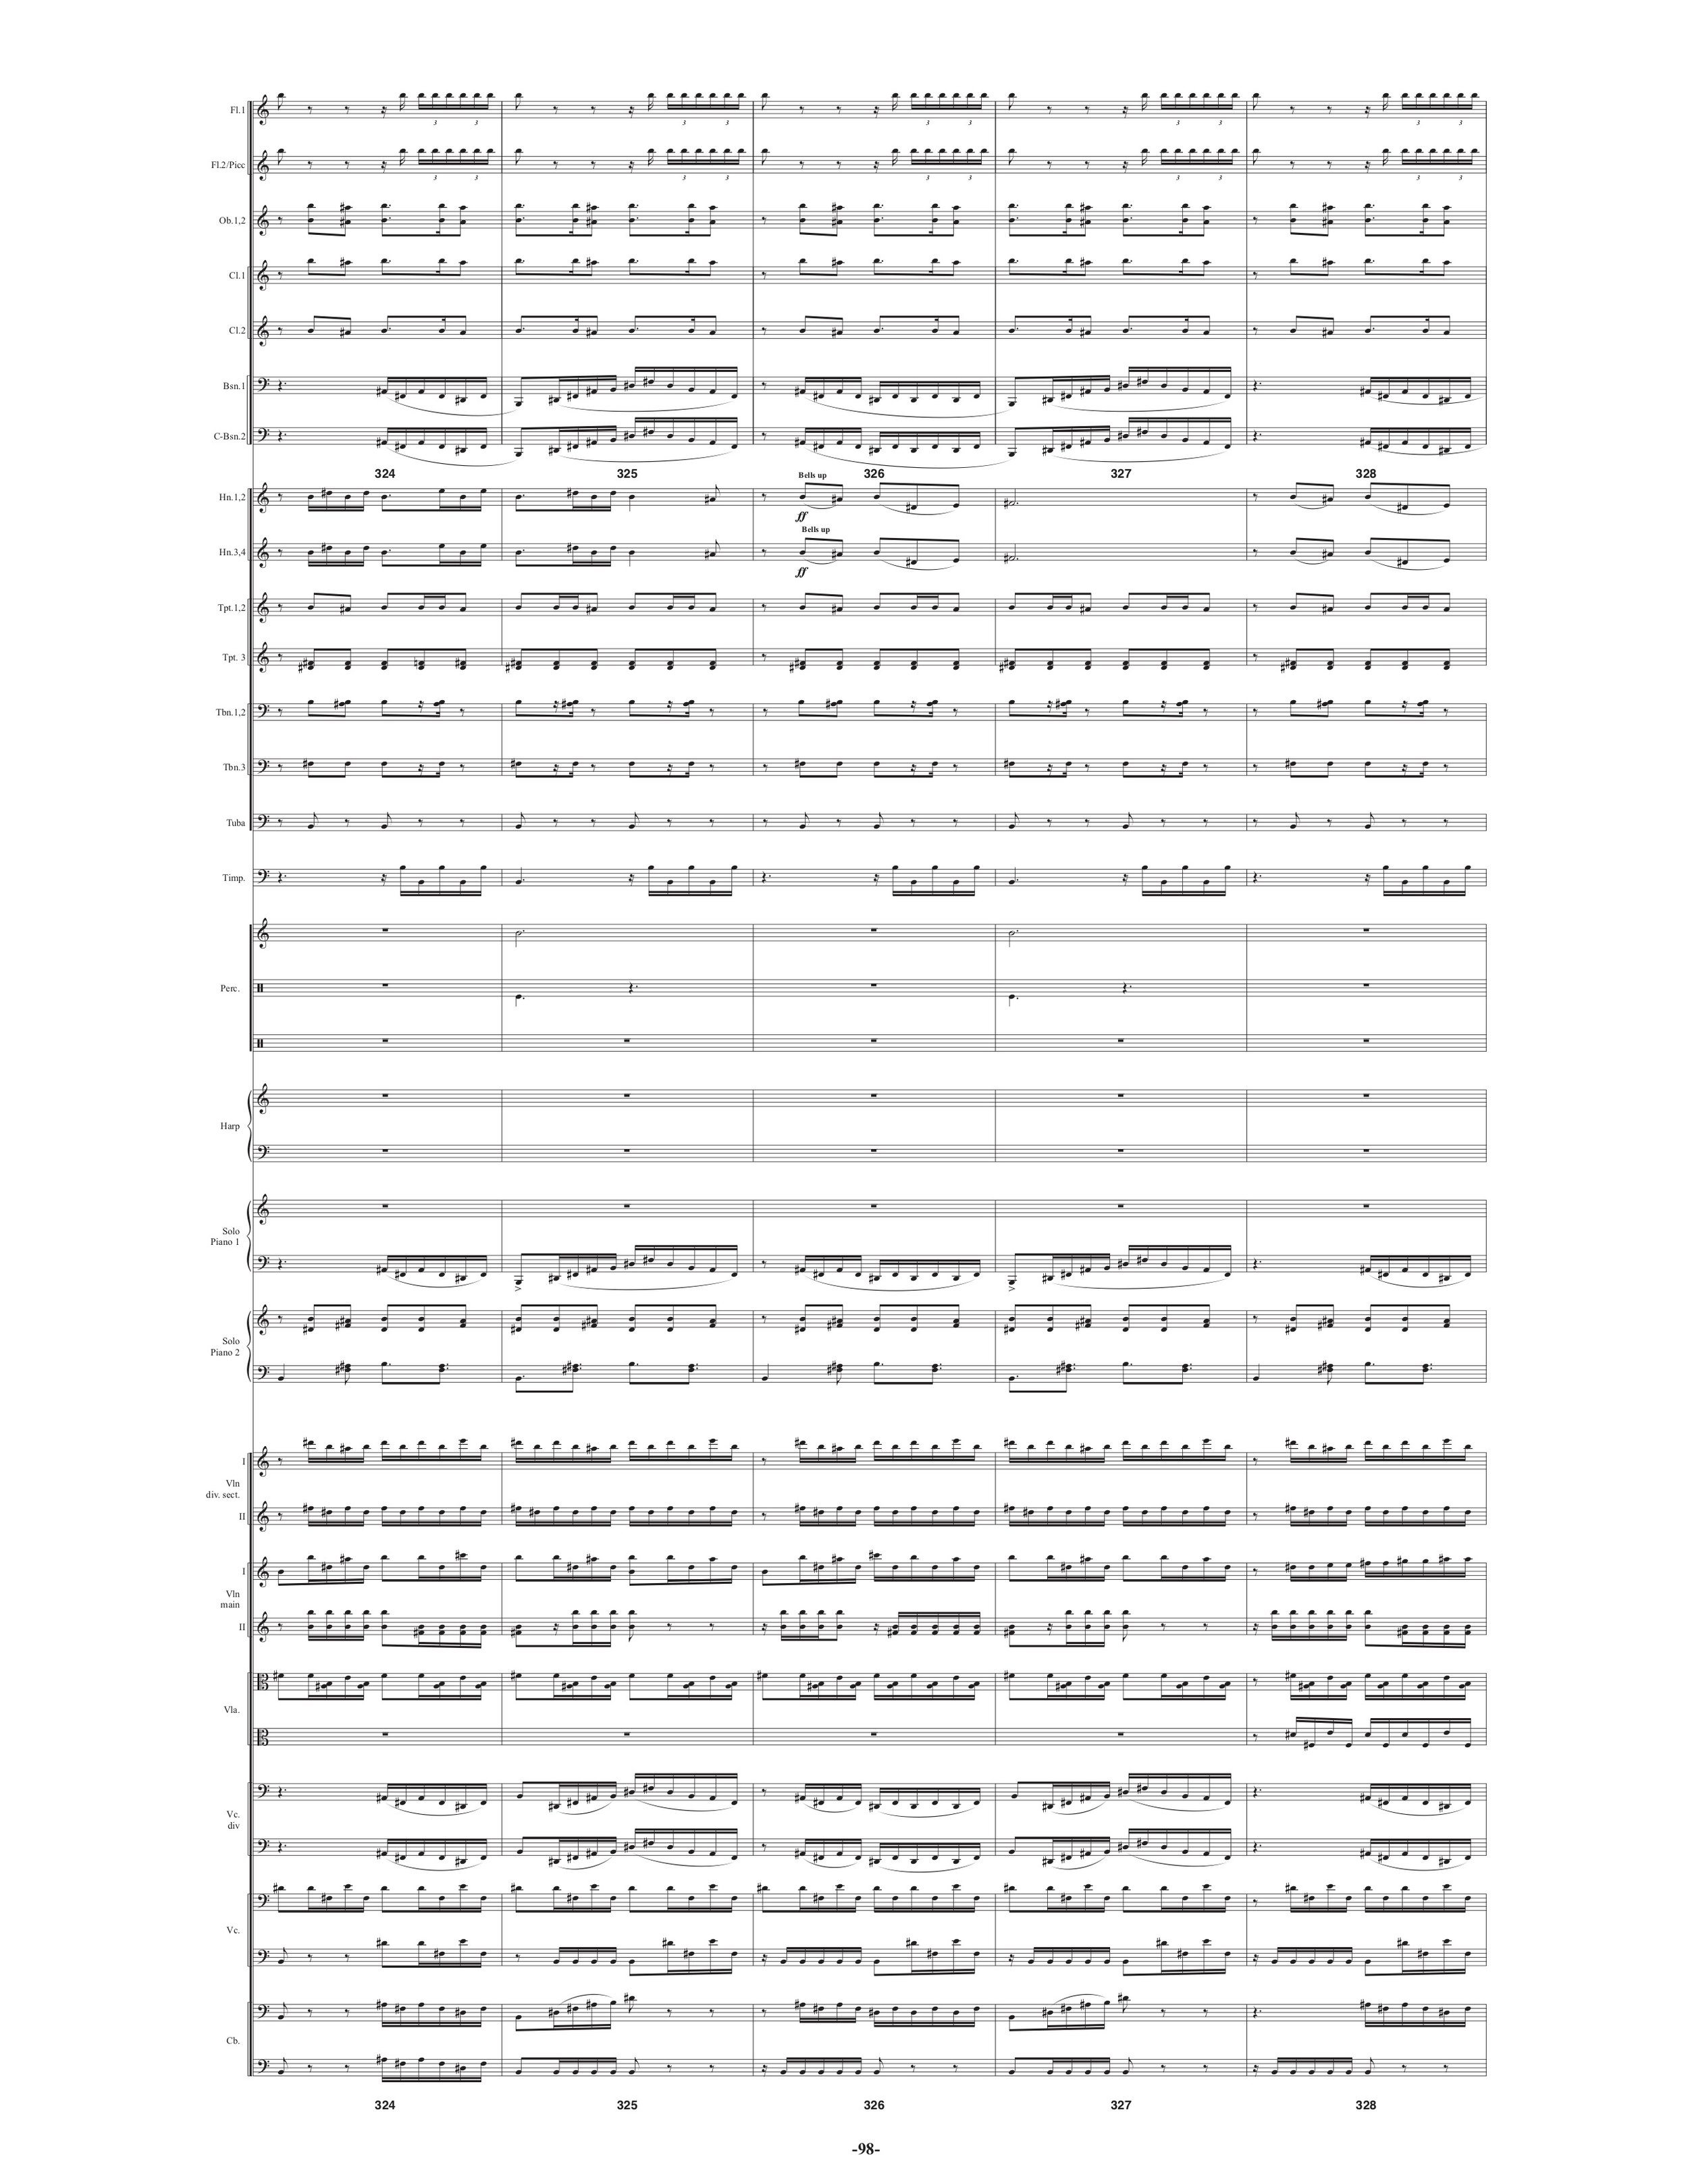 Symphony_Orch & 2 Pianos p103.jpg